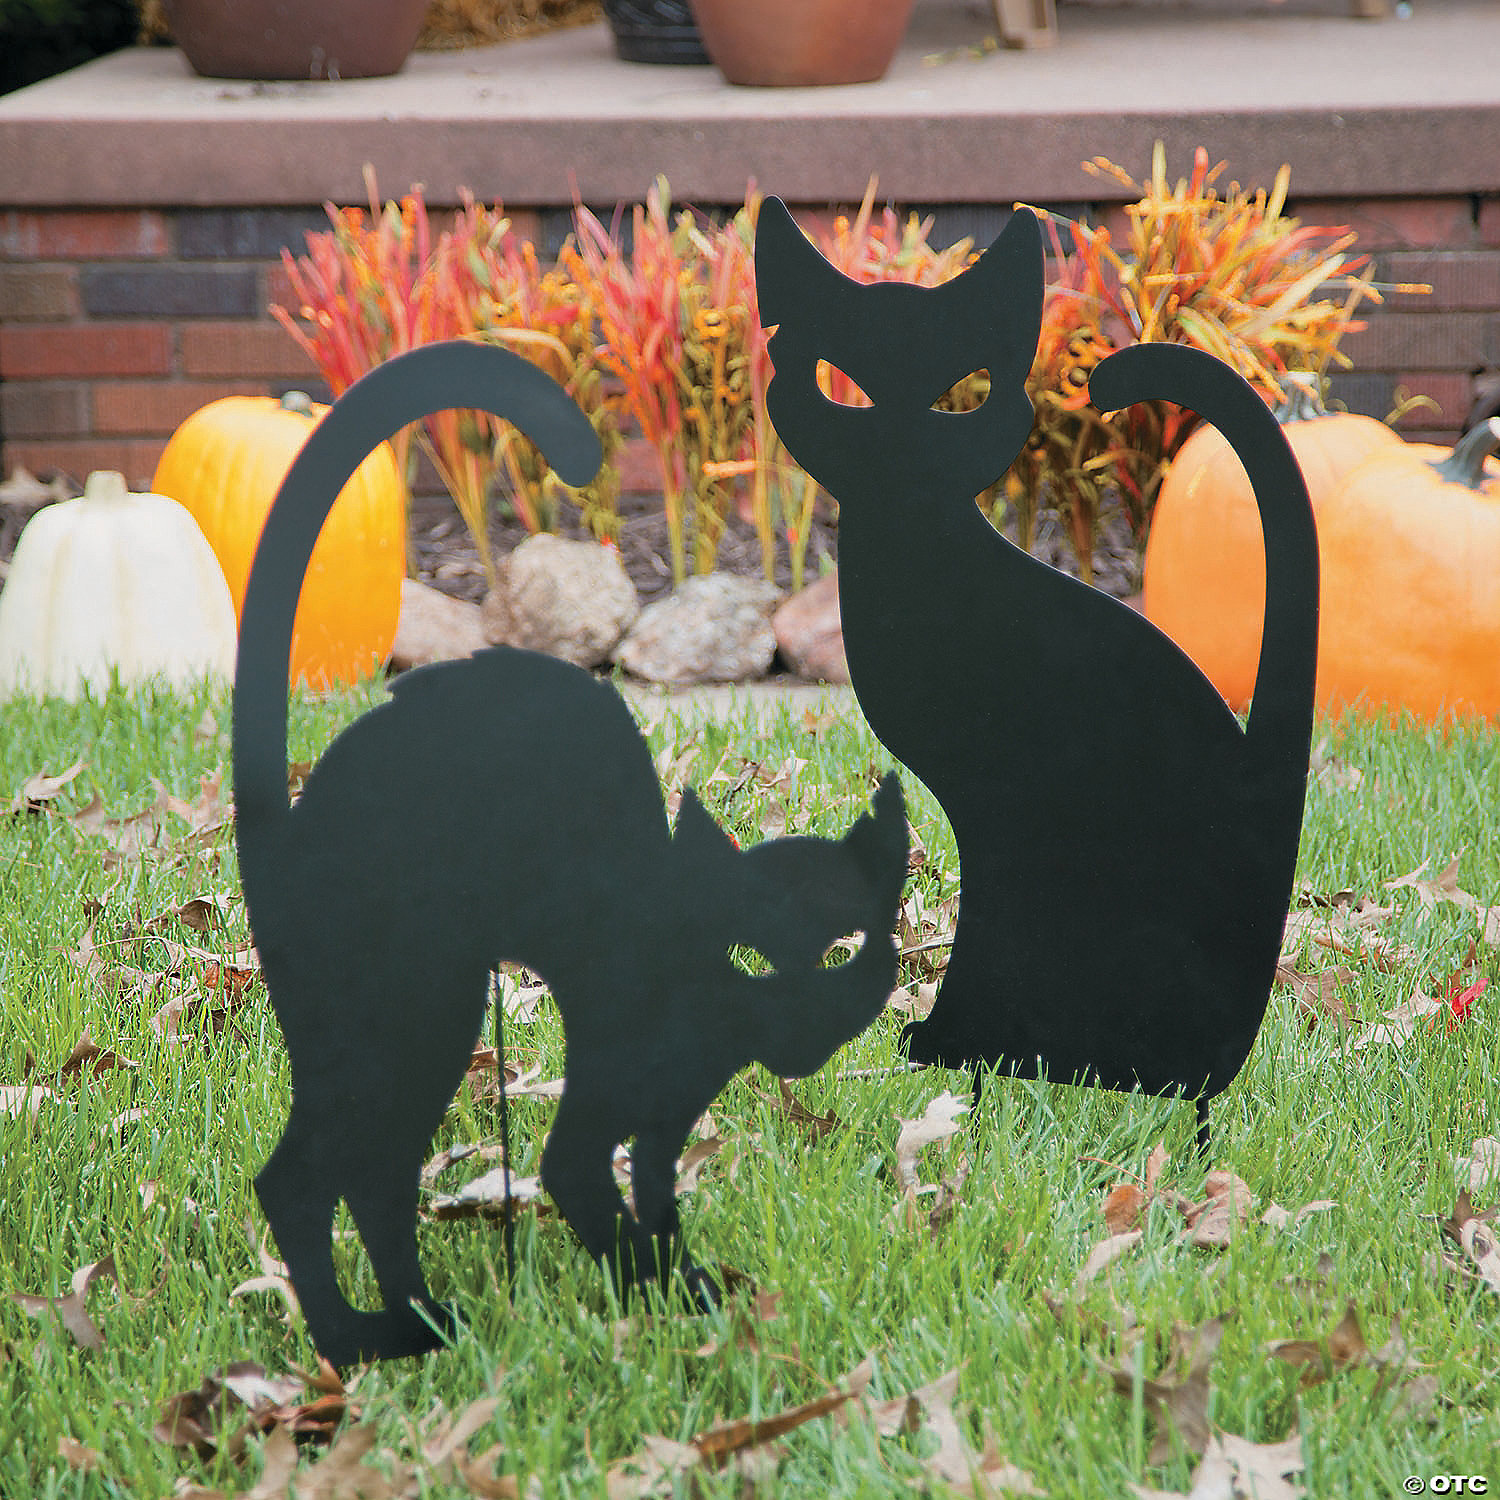 Pumpkin Black Cat Light-Up Halloween Decorations Home Decor 2 Pieces 